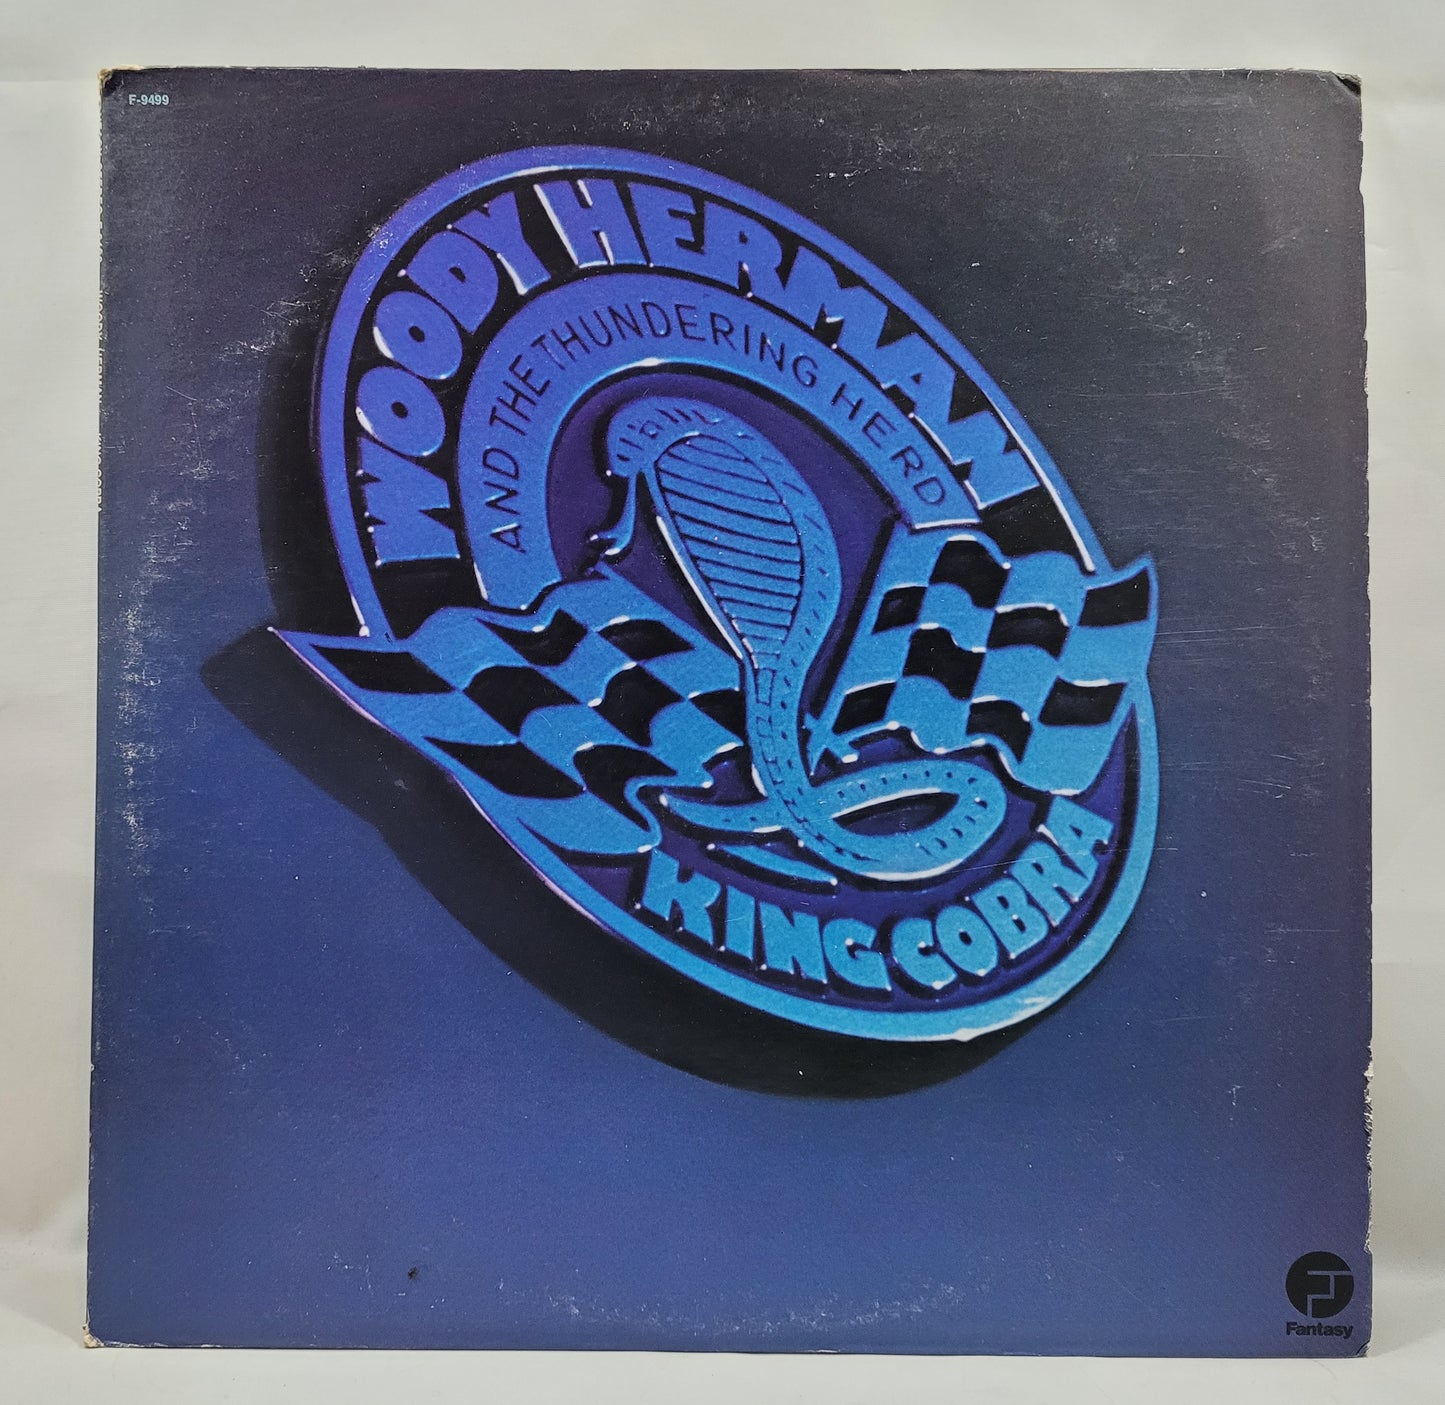 Woody Herman and The Thundering Herd - King Cobra [1976 Promo] [Used Vinyl Record LP]